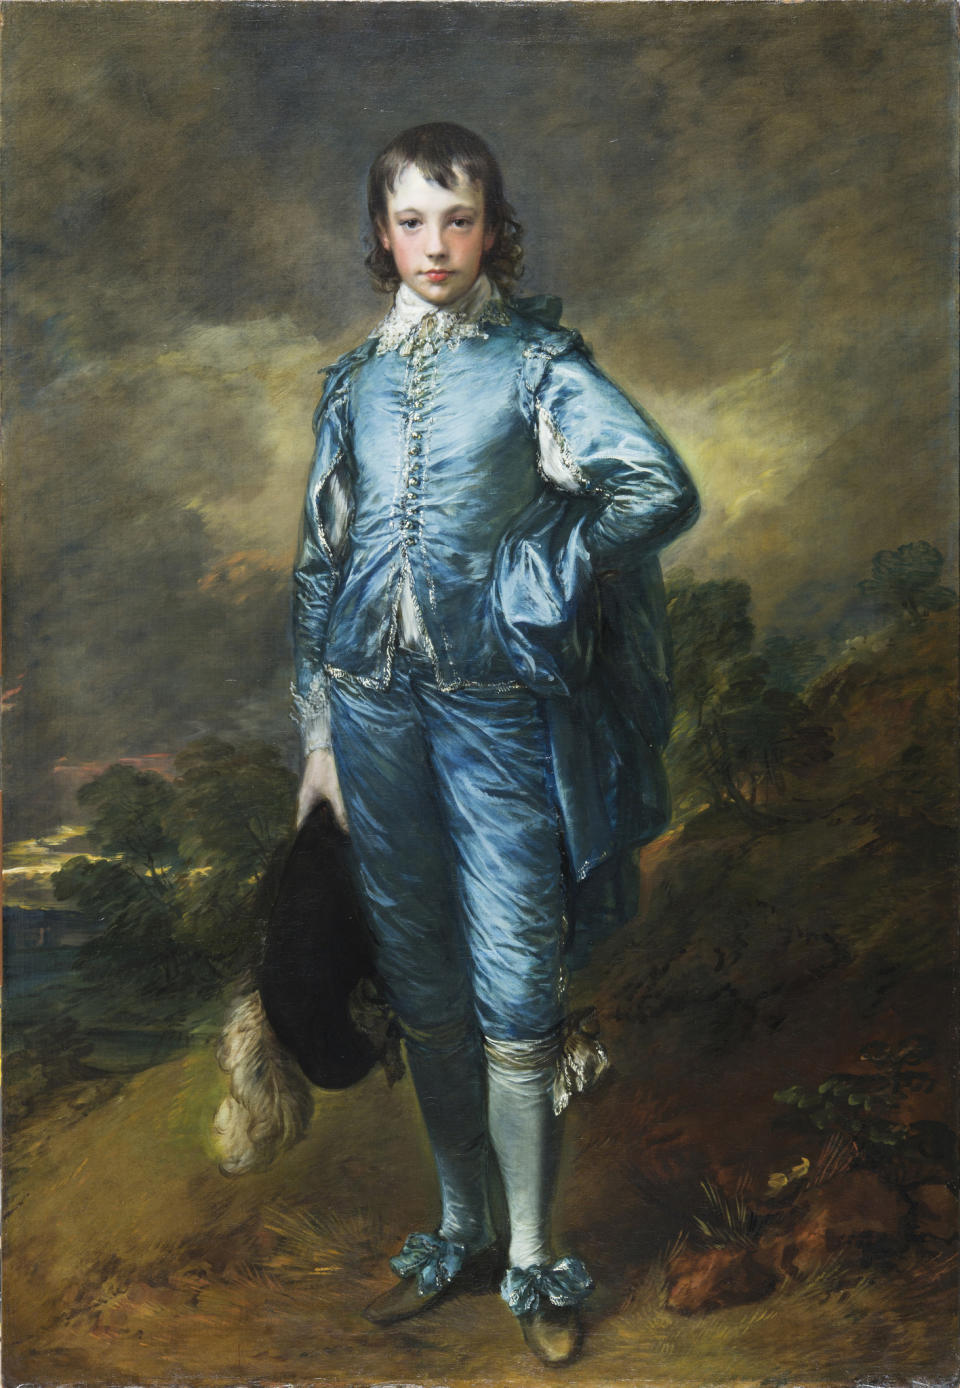 The Blue Boy by Thomas Gainsborough, circa 1770.